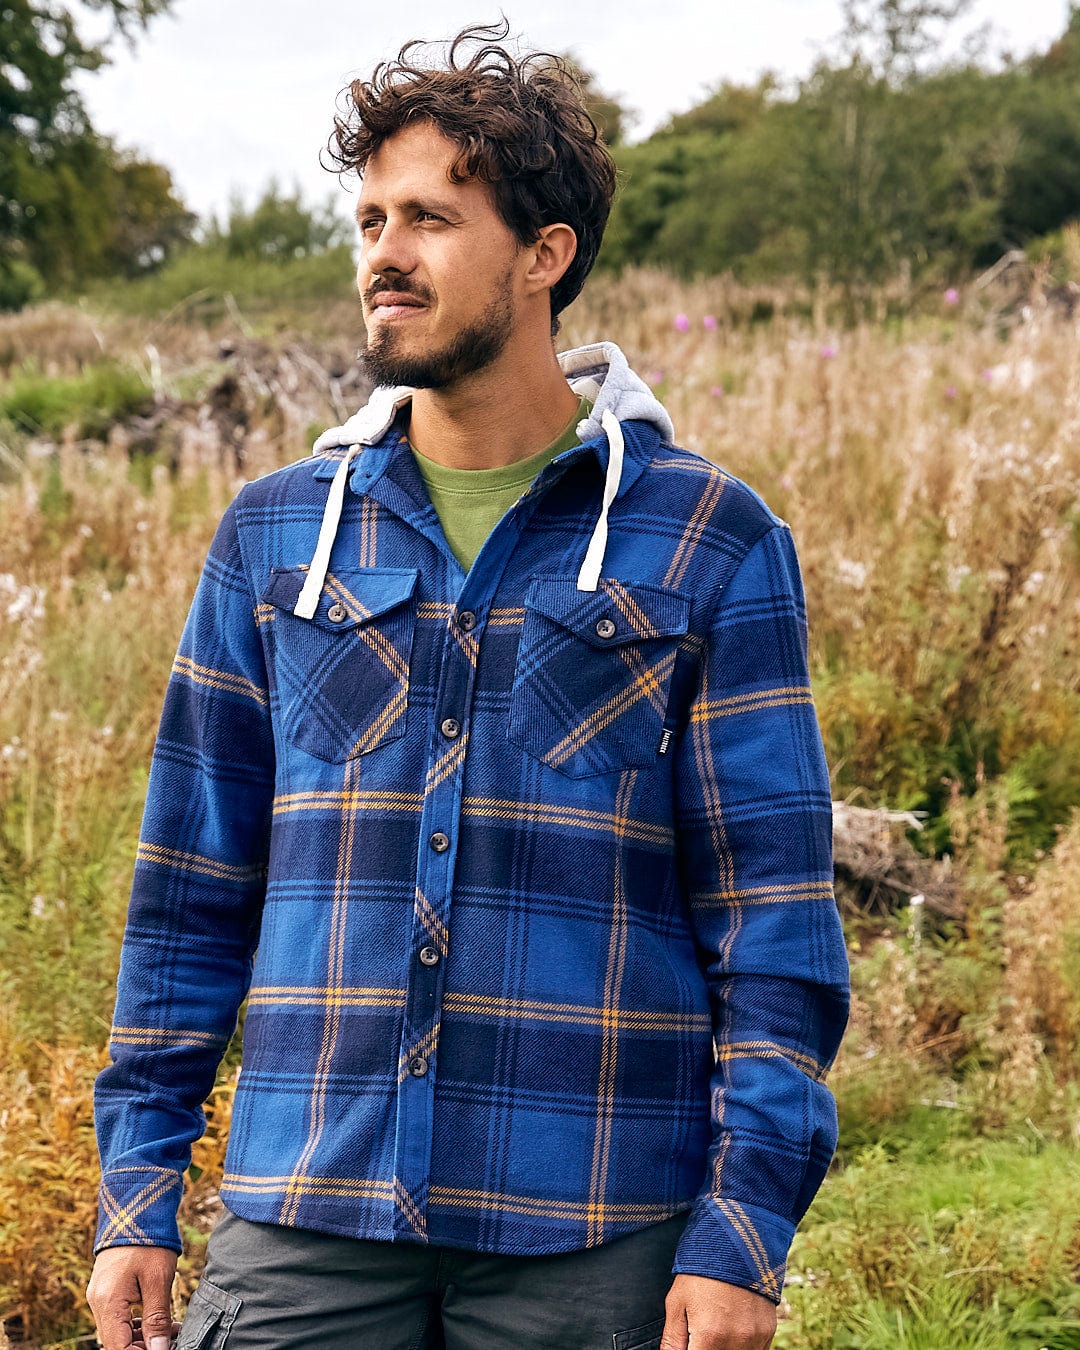 A man in a Saltrock Colter - Mens Hooded Longsleeve Shirt - Dark Blue standing in a field.